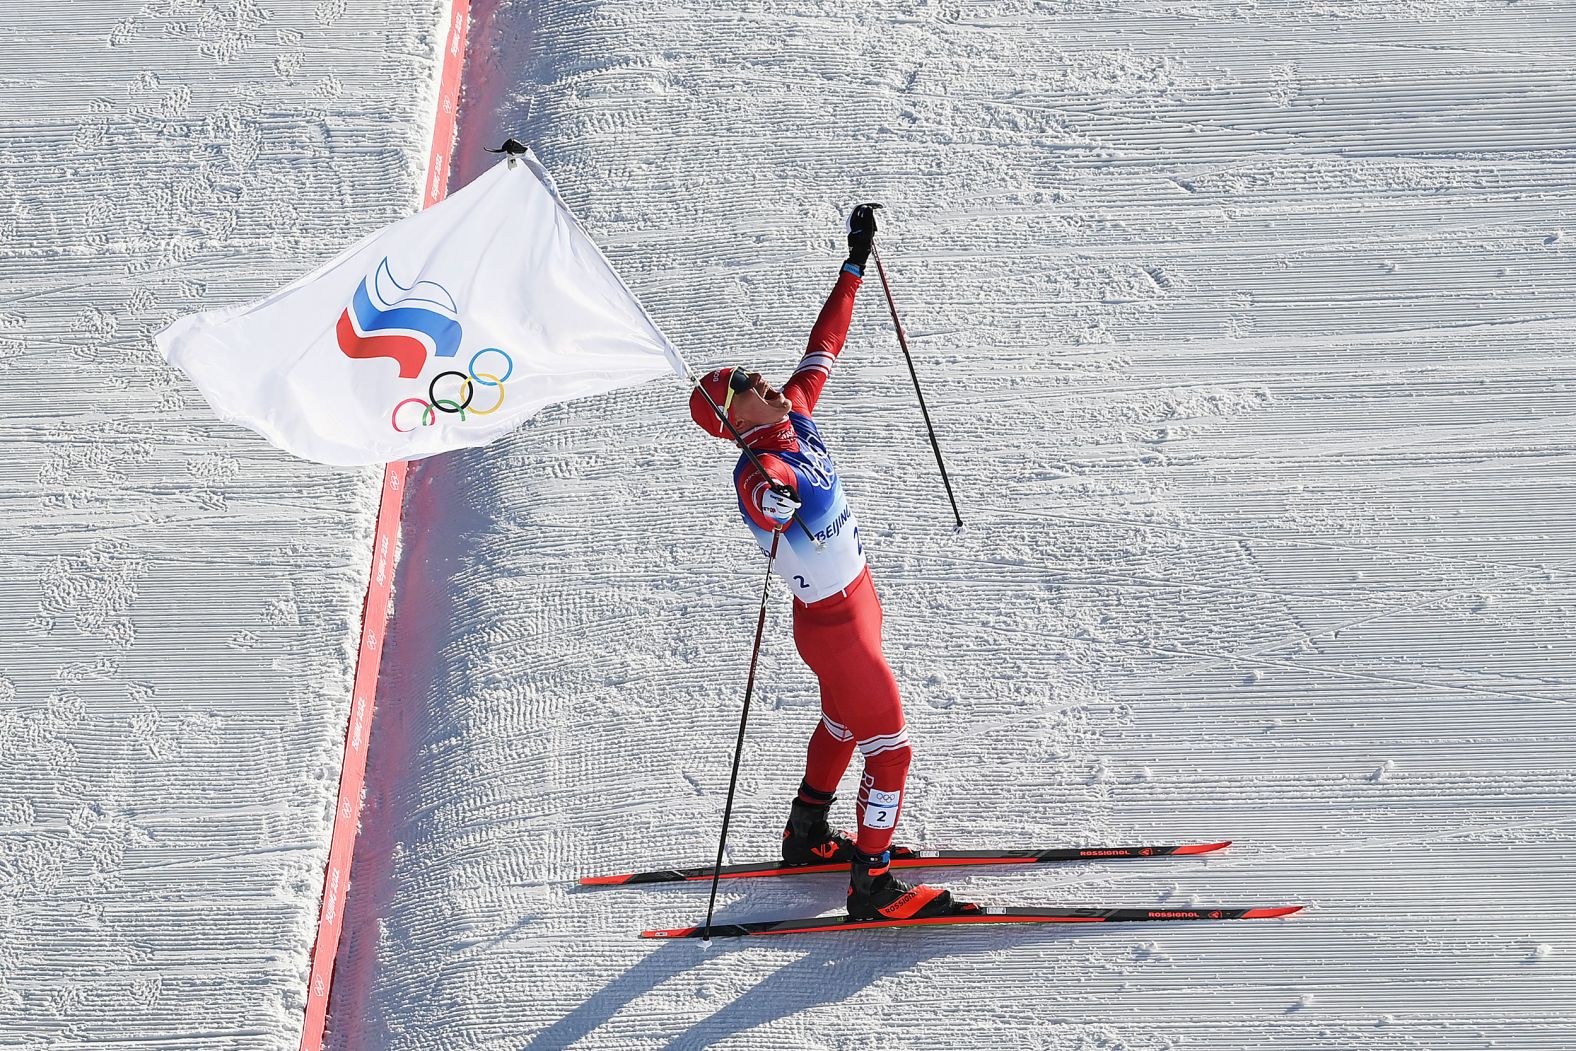 Russian Alexander Bolshunov celebrates after <a href="index.php?page=&url=https%3A%2F%2Fwww.cnn.com%2Fworld%2Flive-news%2Fbeijing-winter-olympics-02-06-22-spt%2Fh_1993a8651ad6f621e1b05e2848c9ae1e" target="_blank">winning the gold medal in the skiathlon</a> on February 6.